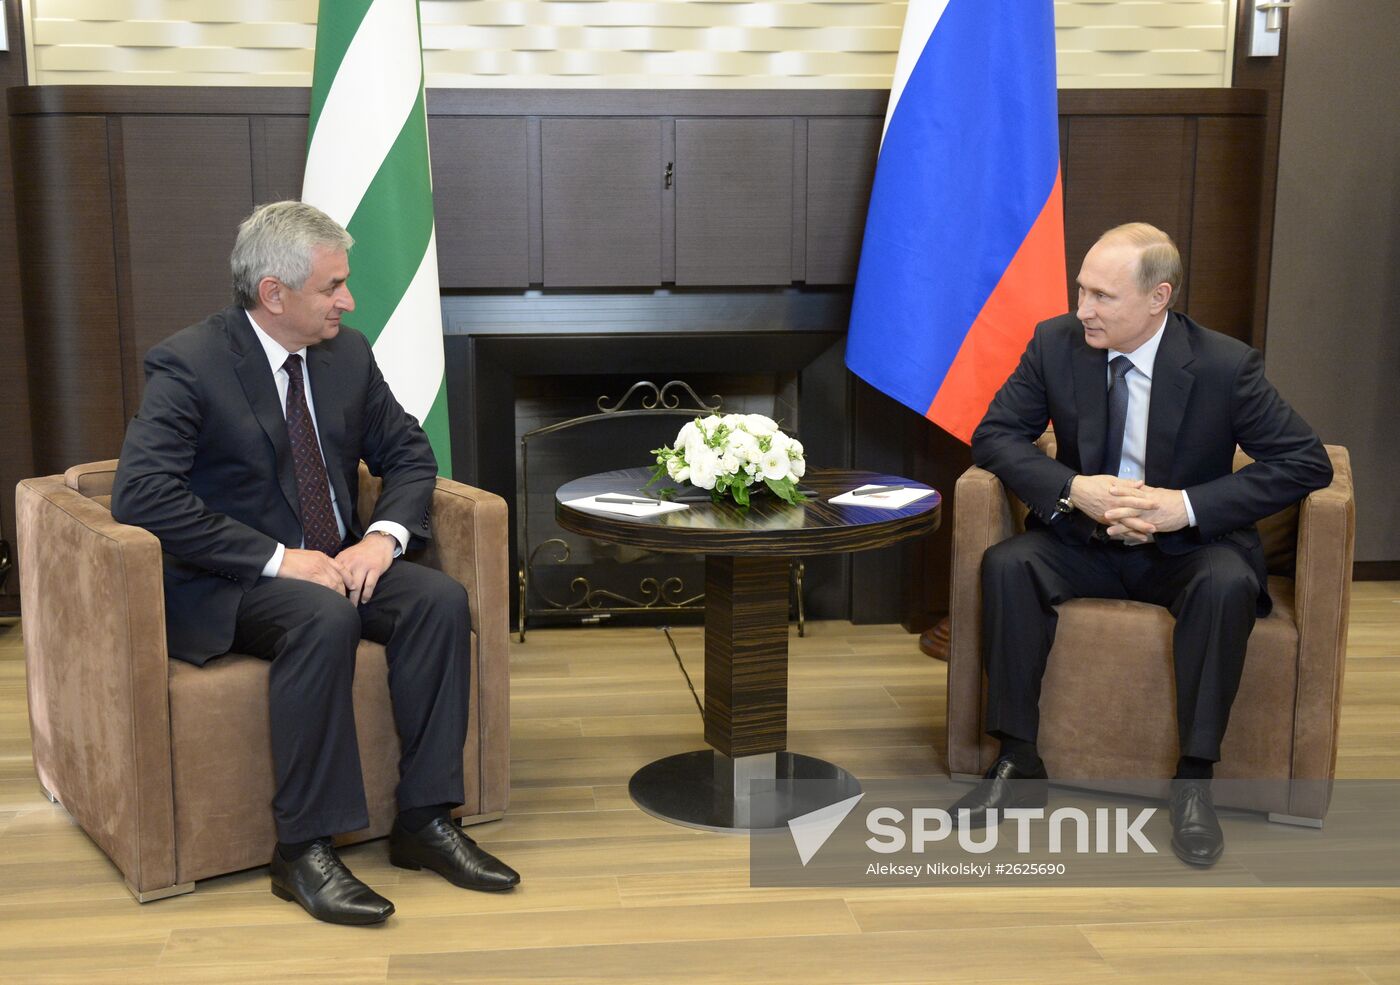 Russian President Putin meets with Abkhaz President Khajimba